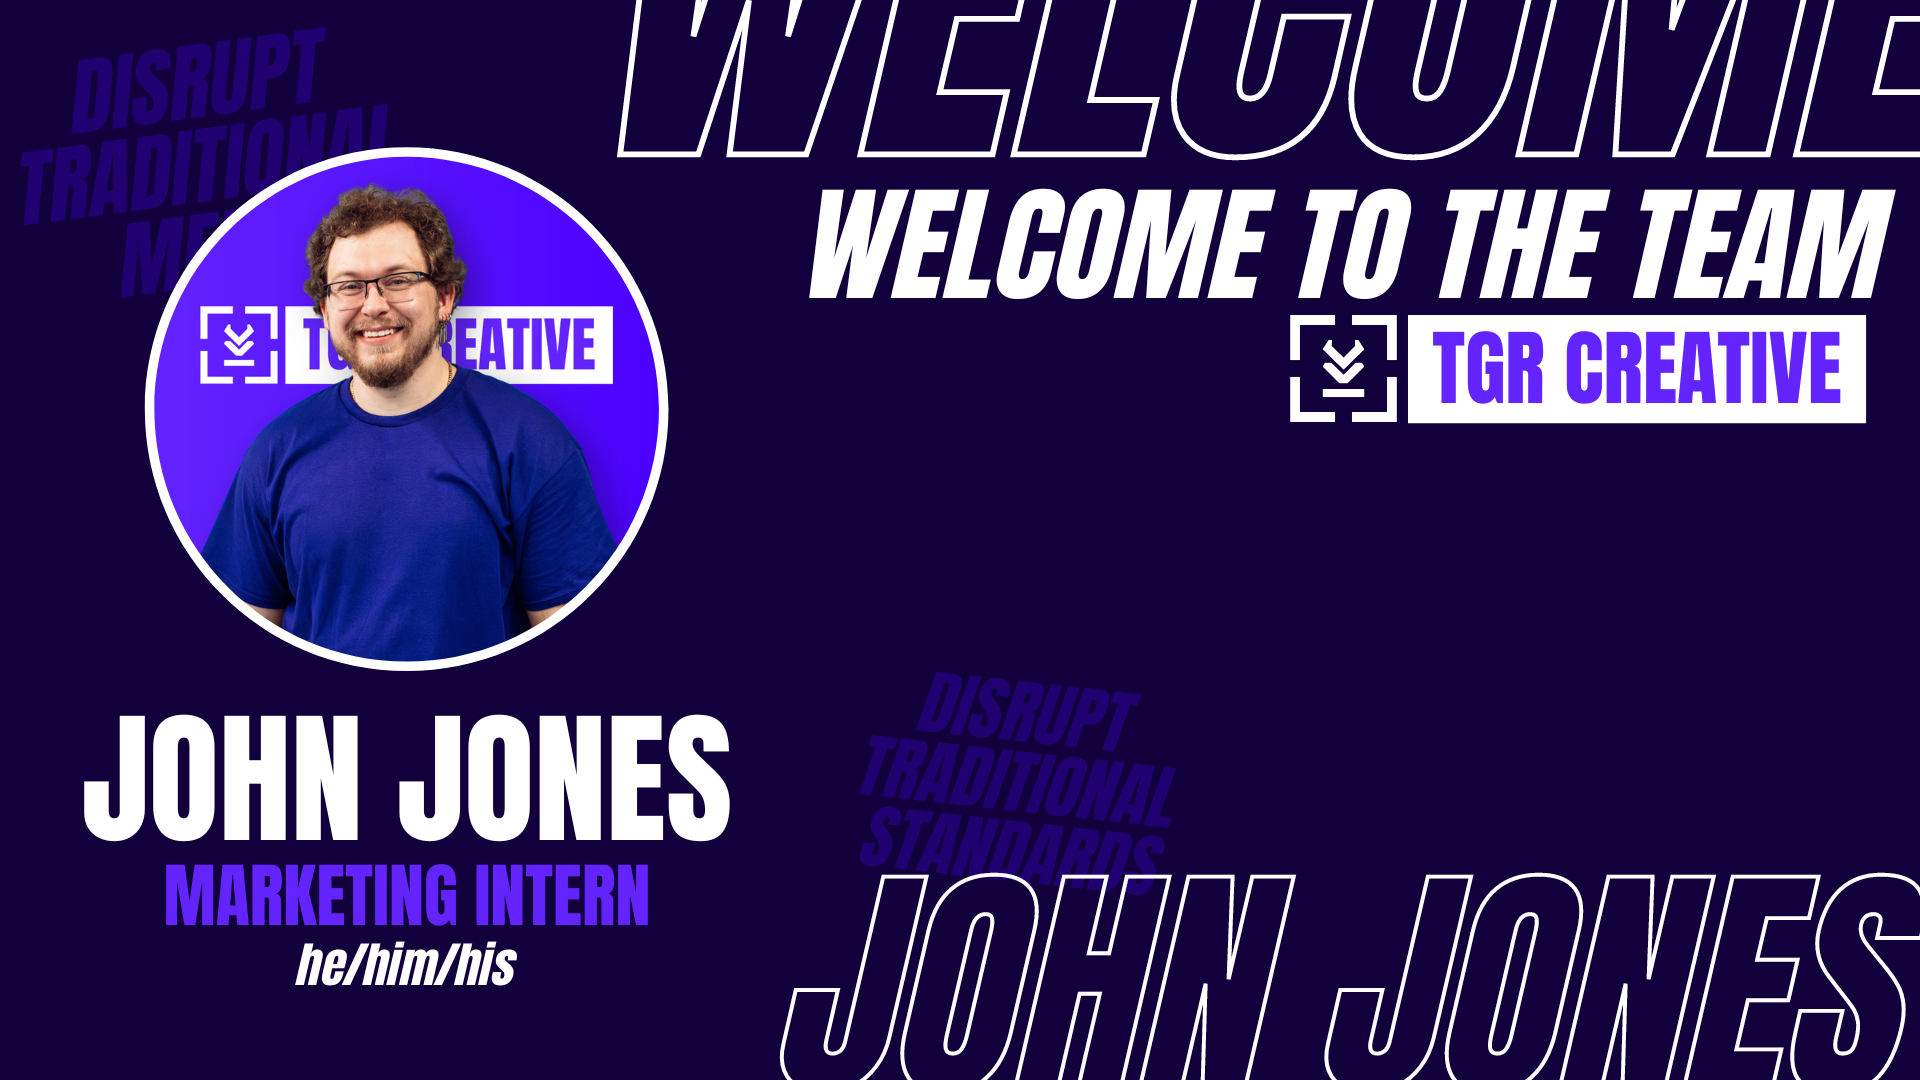 Johnathon Jones Joins TGR Creative as Marketing Intern, Bringing Fresh Perspective and Ambition